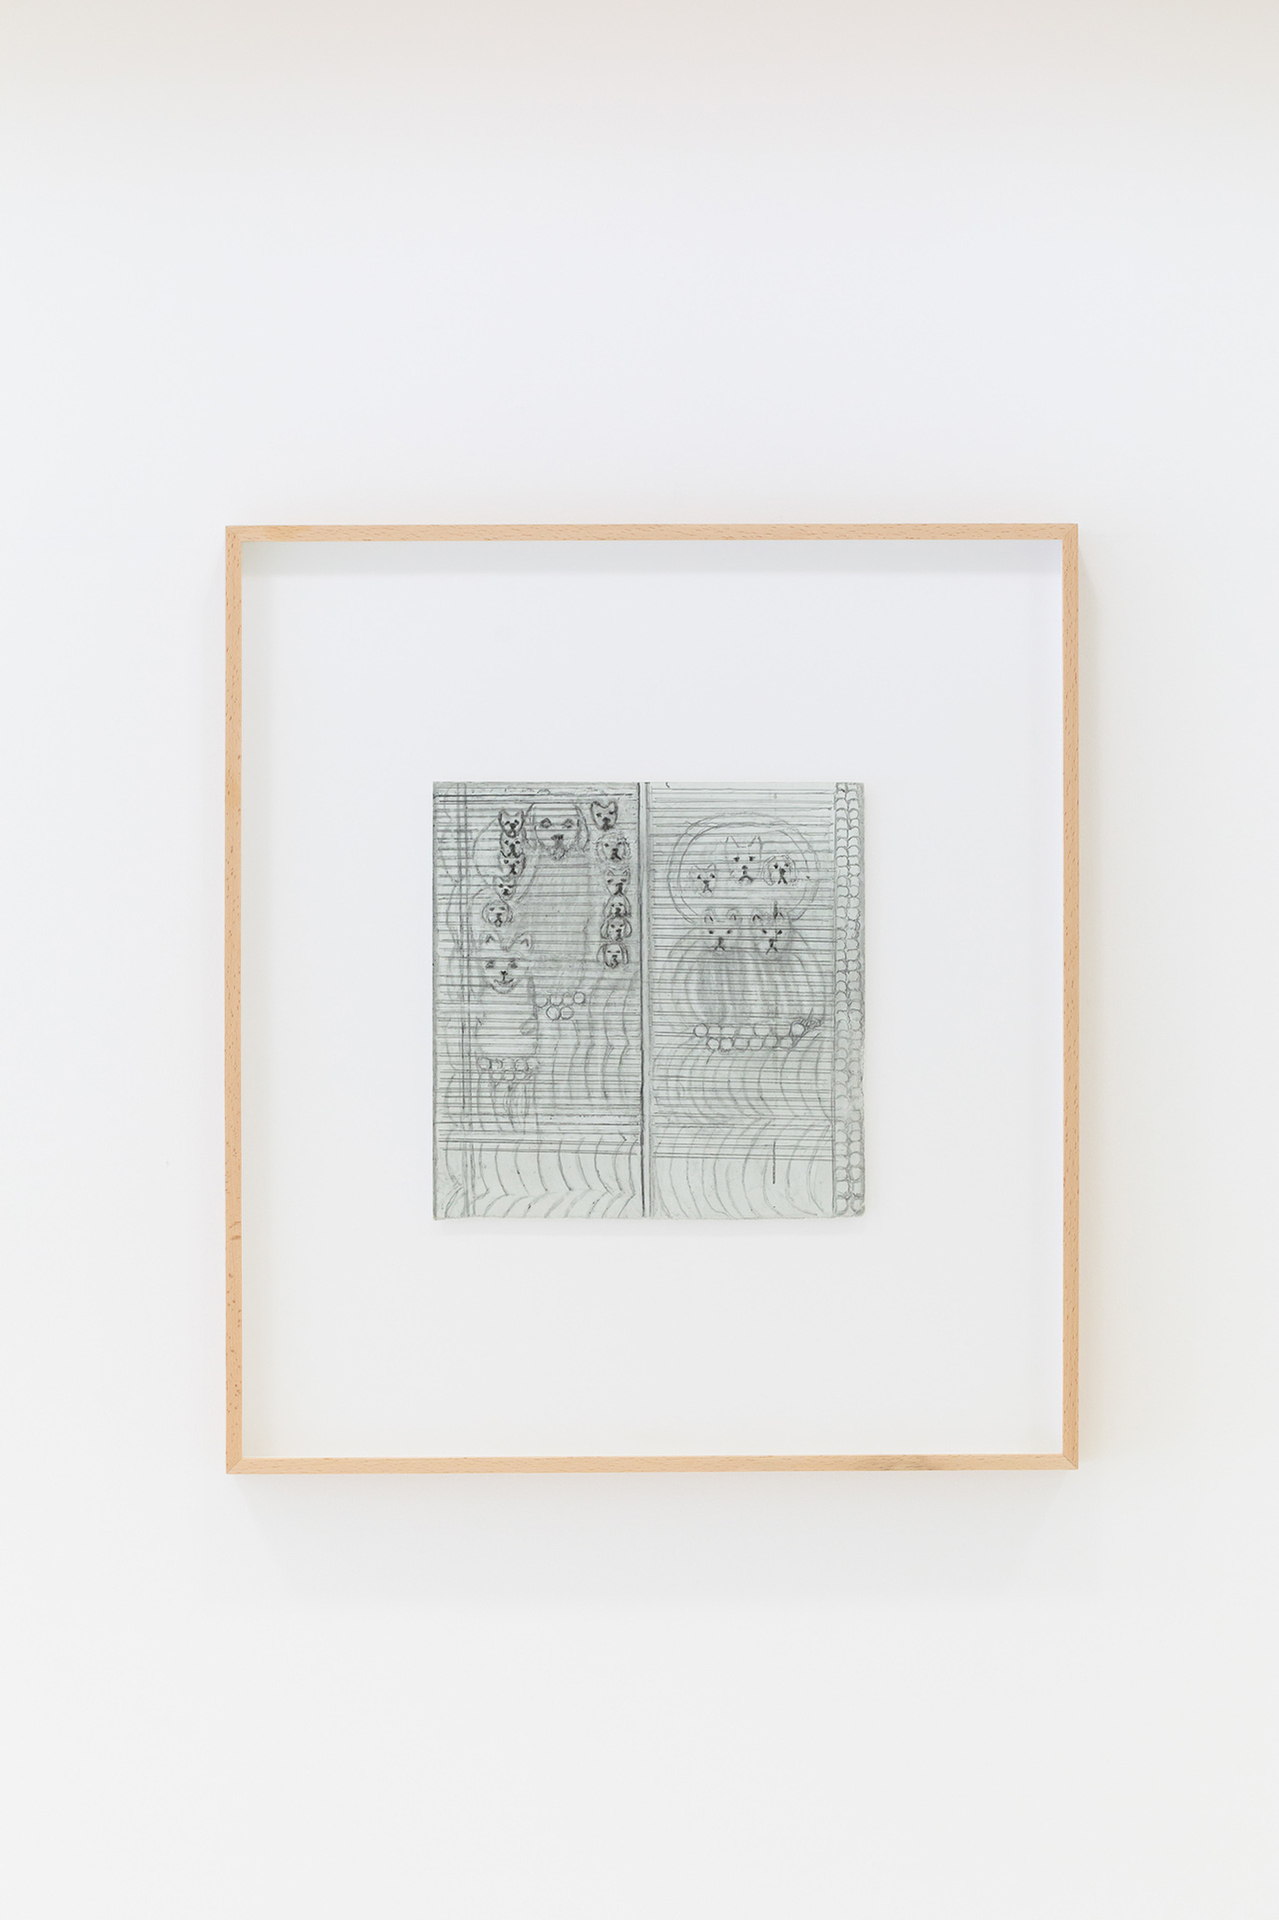 Ricardo Passaporte, Untitled 7, 2021 Pencil on paper 65 x 58,5 cm